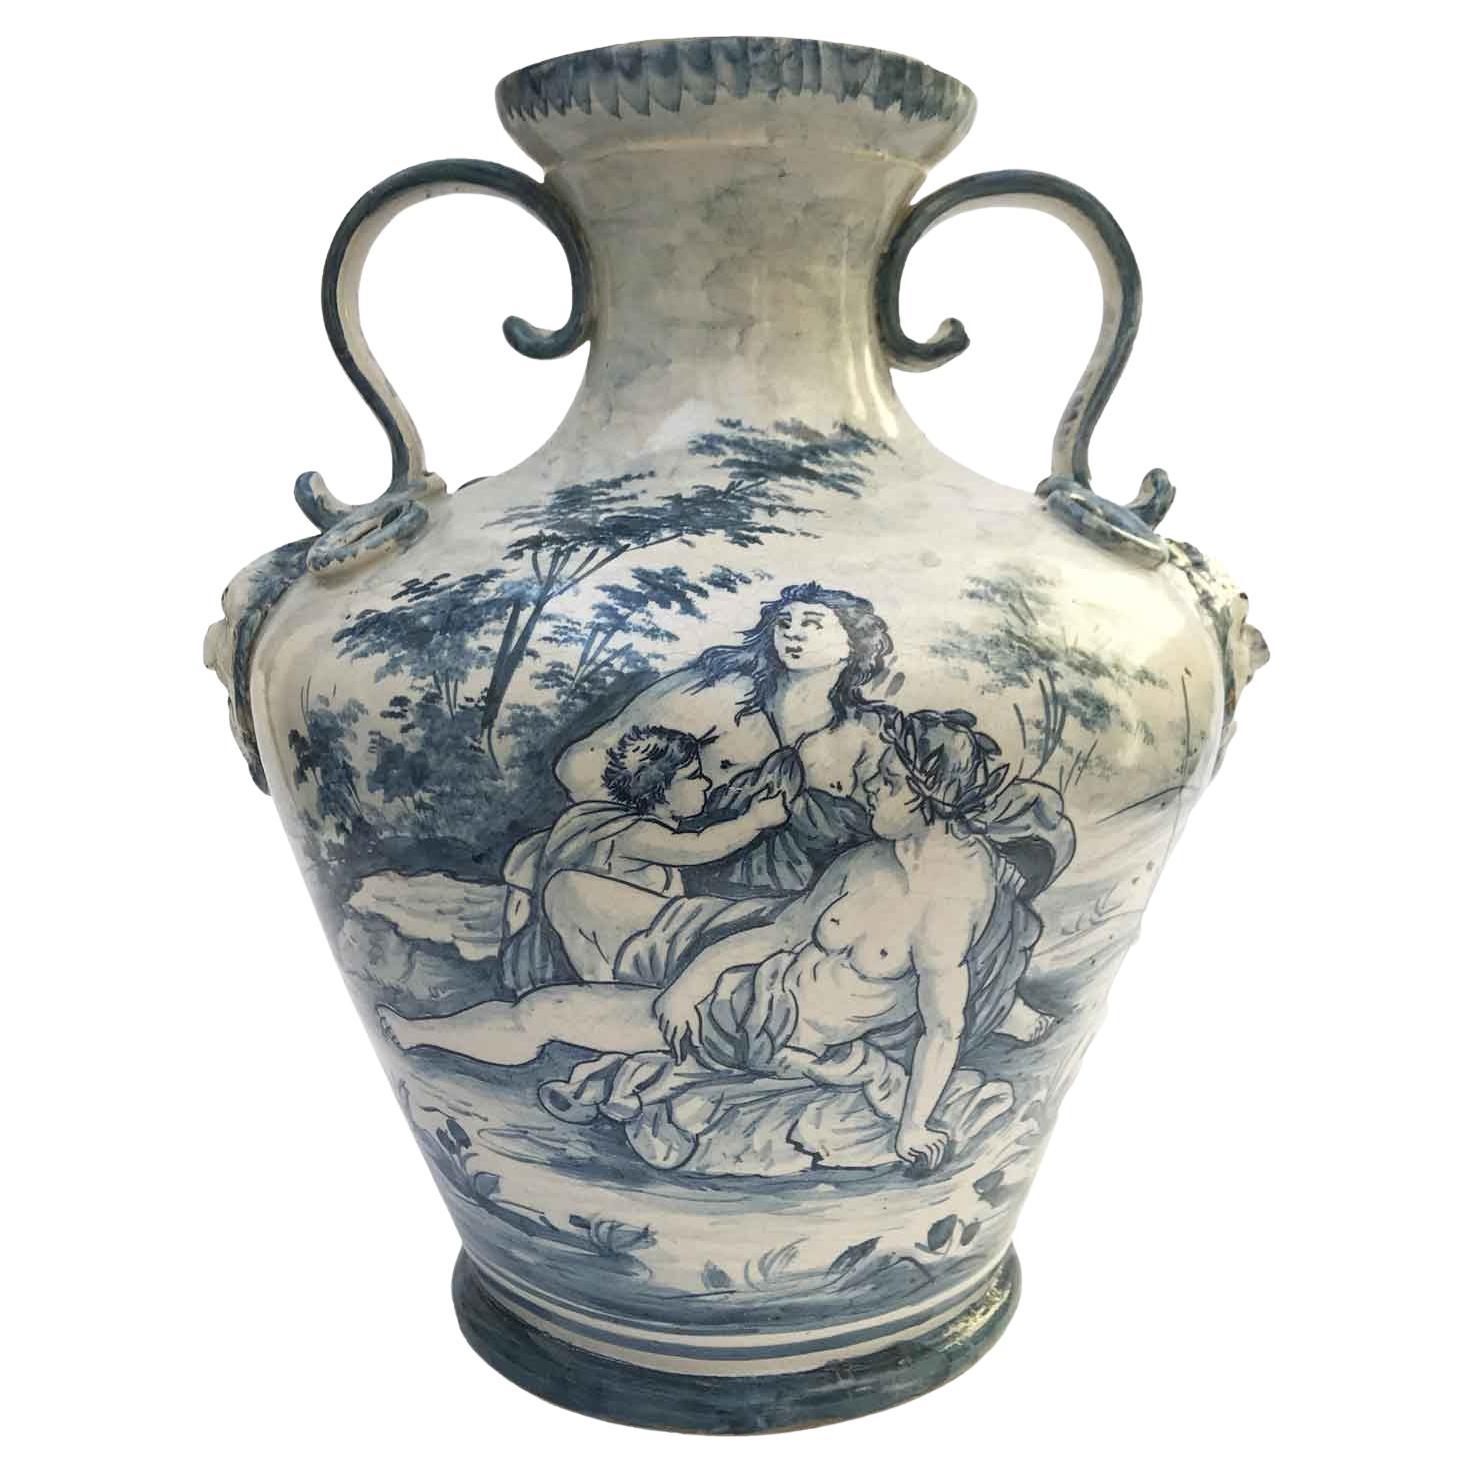 19th Century Italian Blue and White Maiolica Savona Vase 